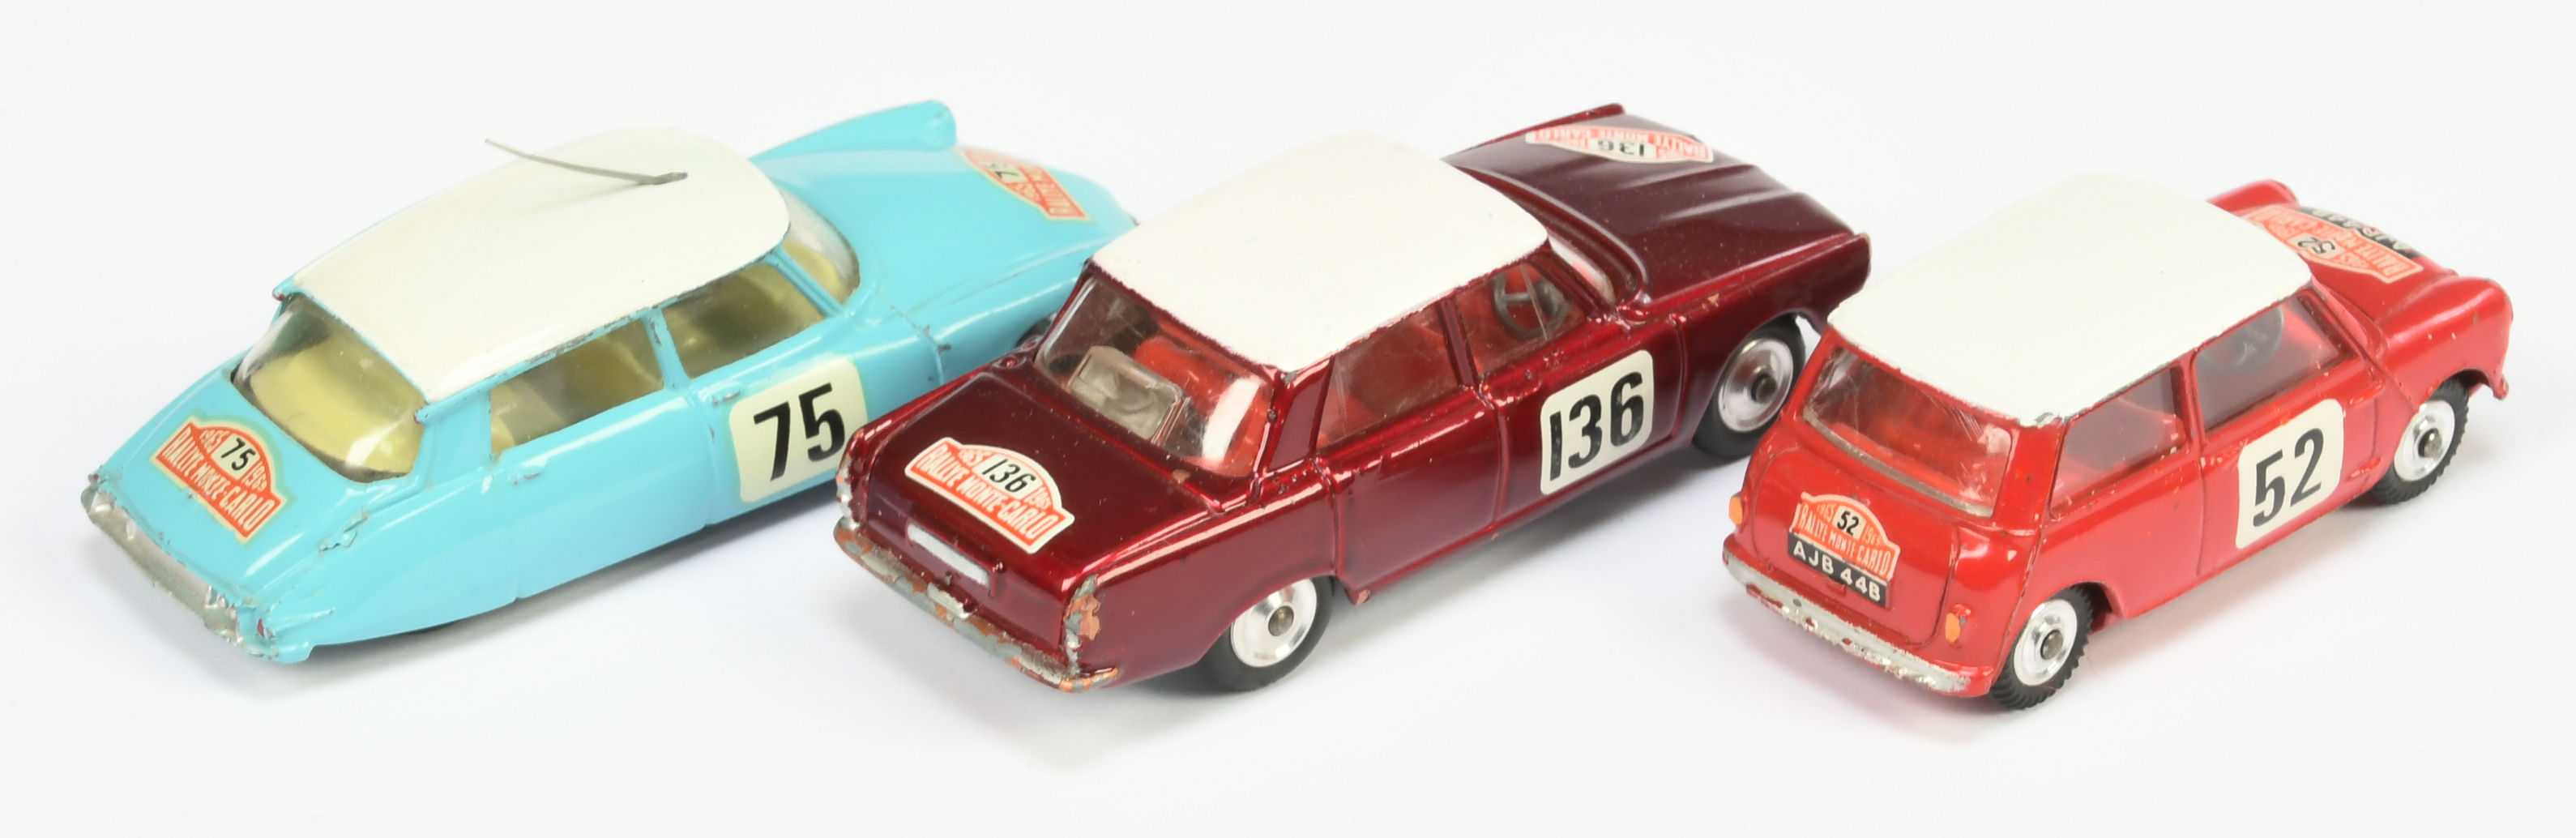 Corgi Toys Unboxed "Rallye Monte Carlo" Gift Set To Include - (1) Rover 200 - Metallic maroon, (2... - Image 2 of 2